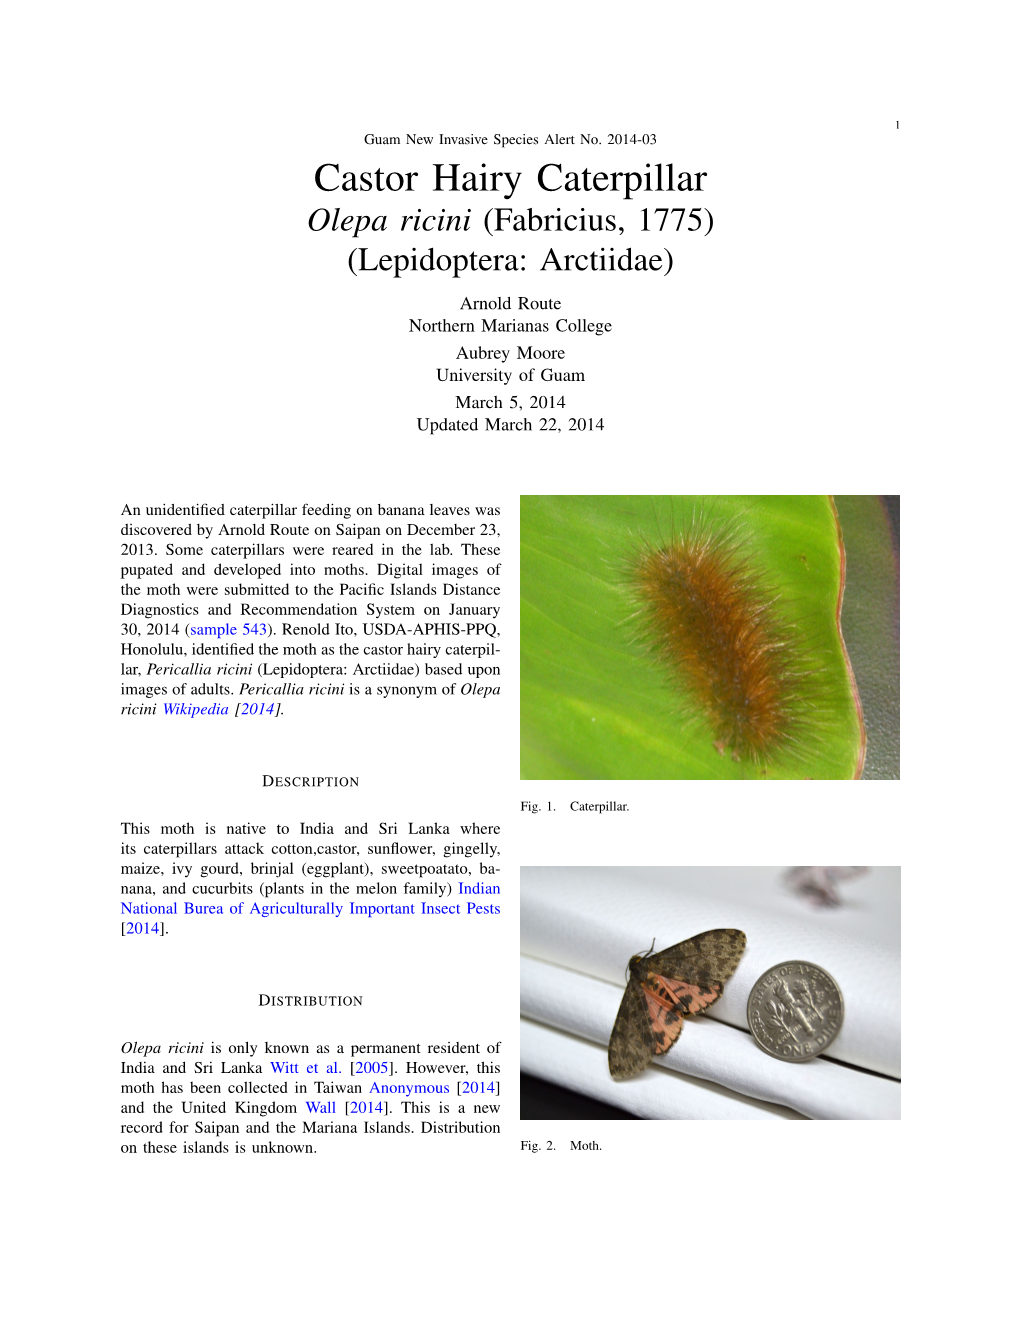 Castor Hairy Caterpillar